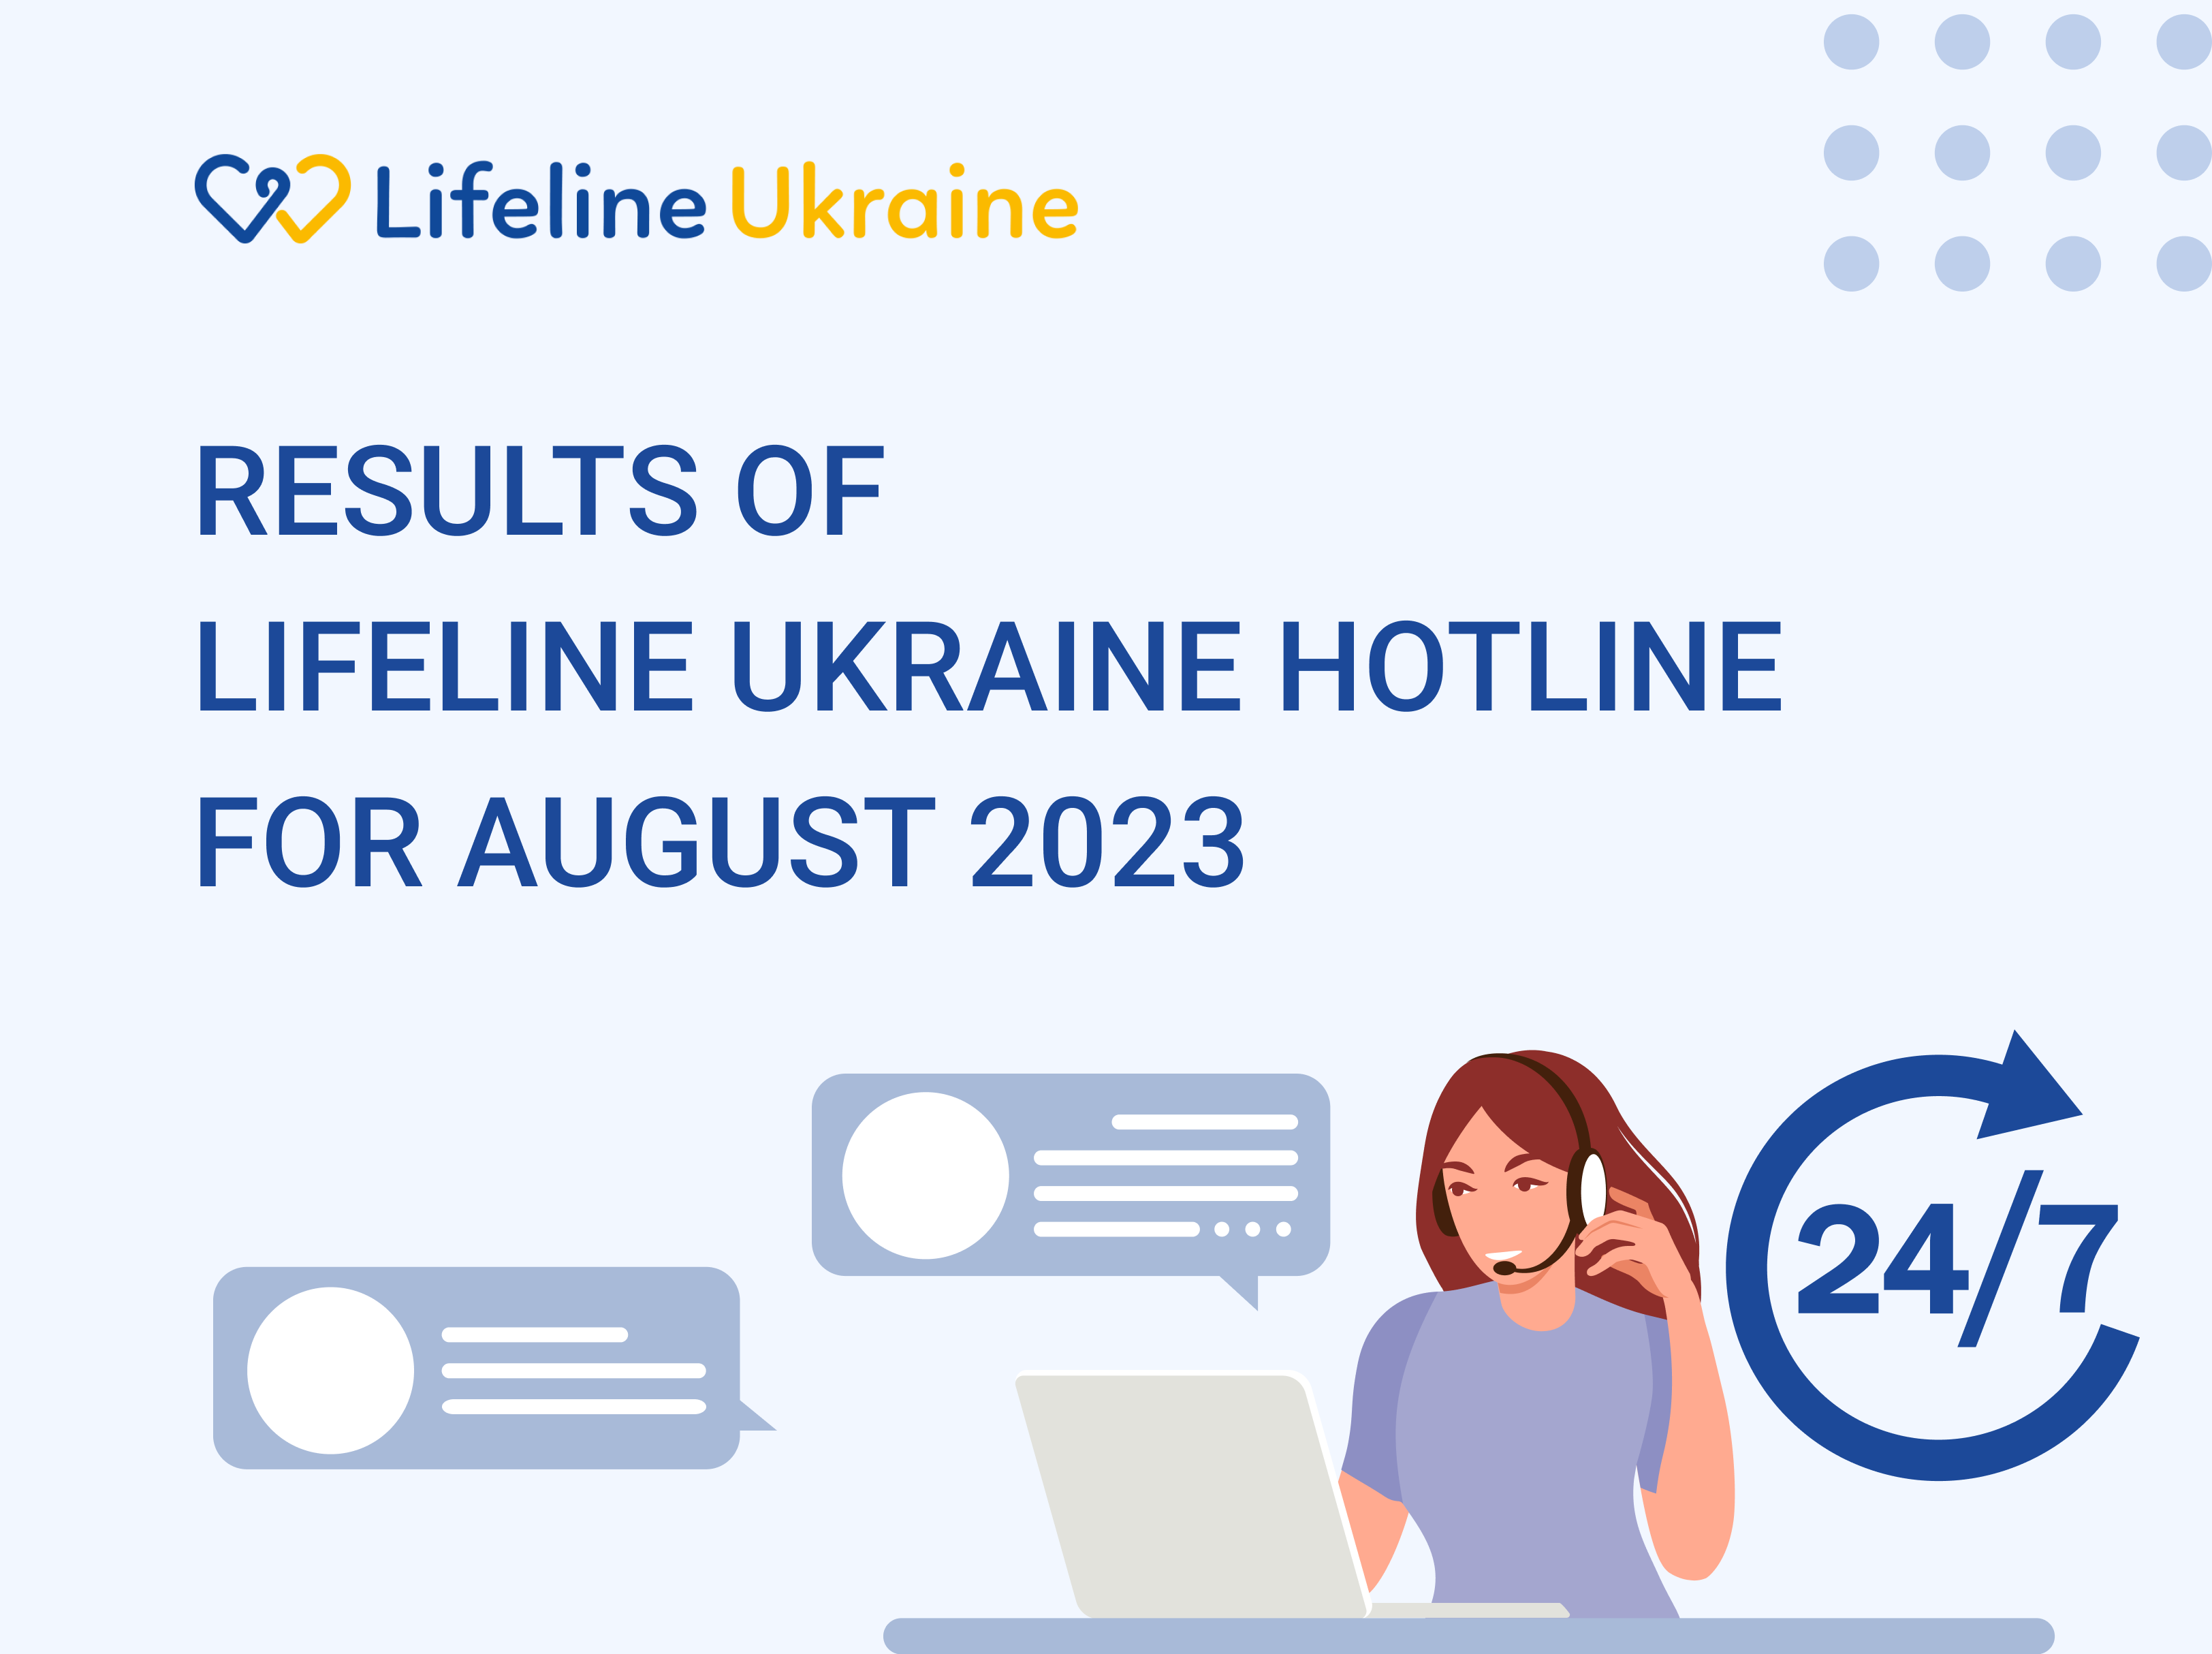 LifeLine Ukraine Hotline manager answers calls